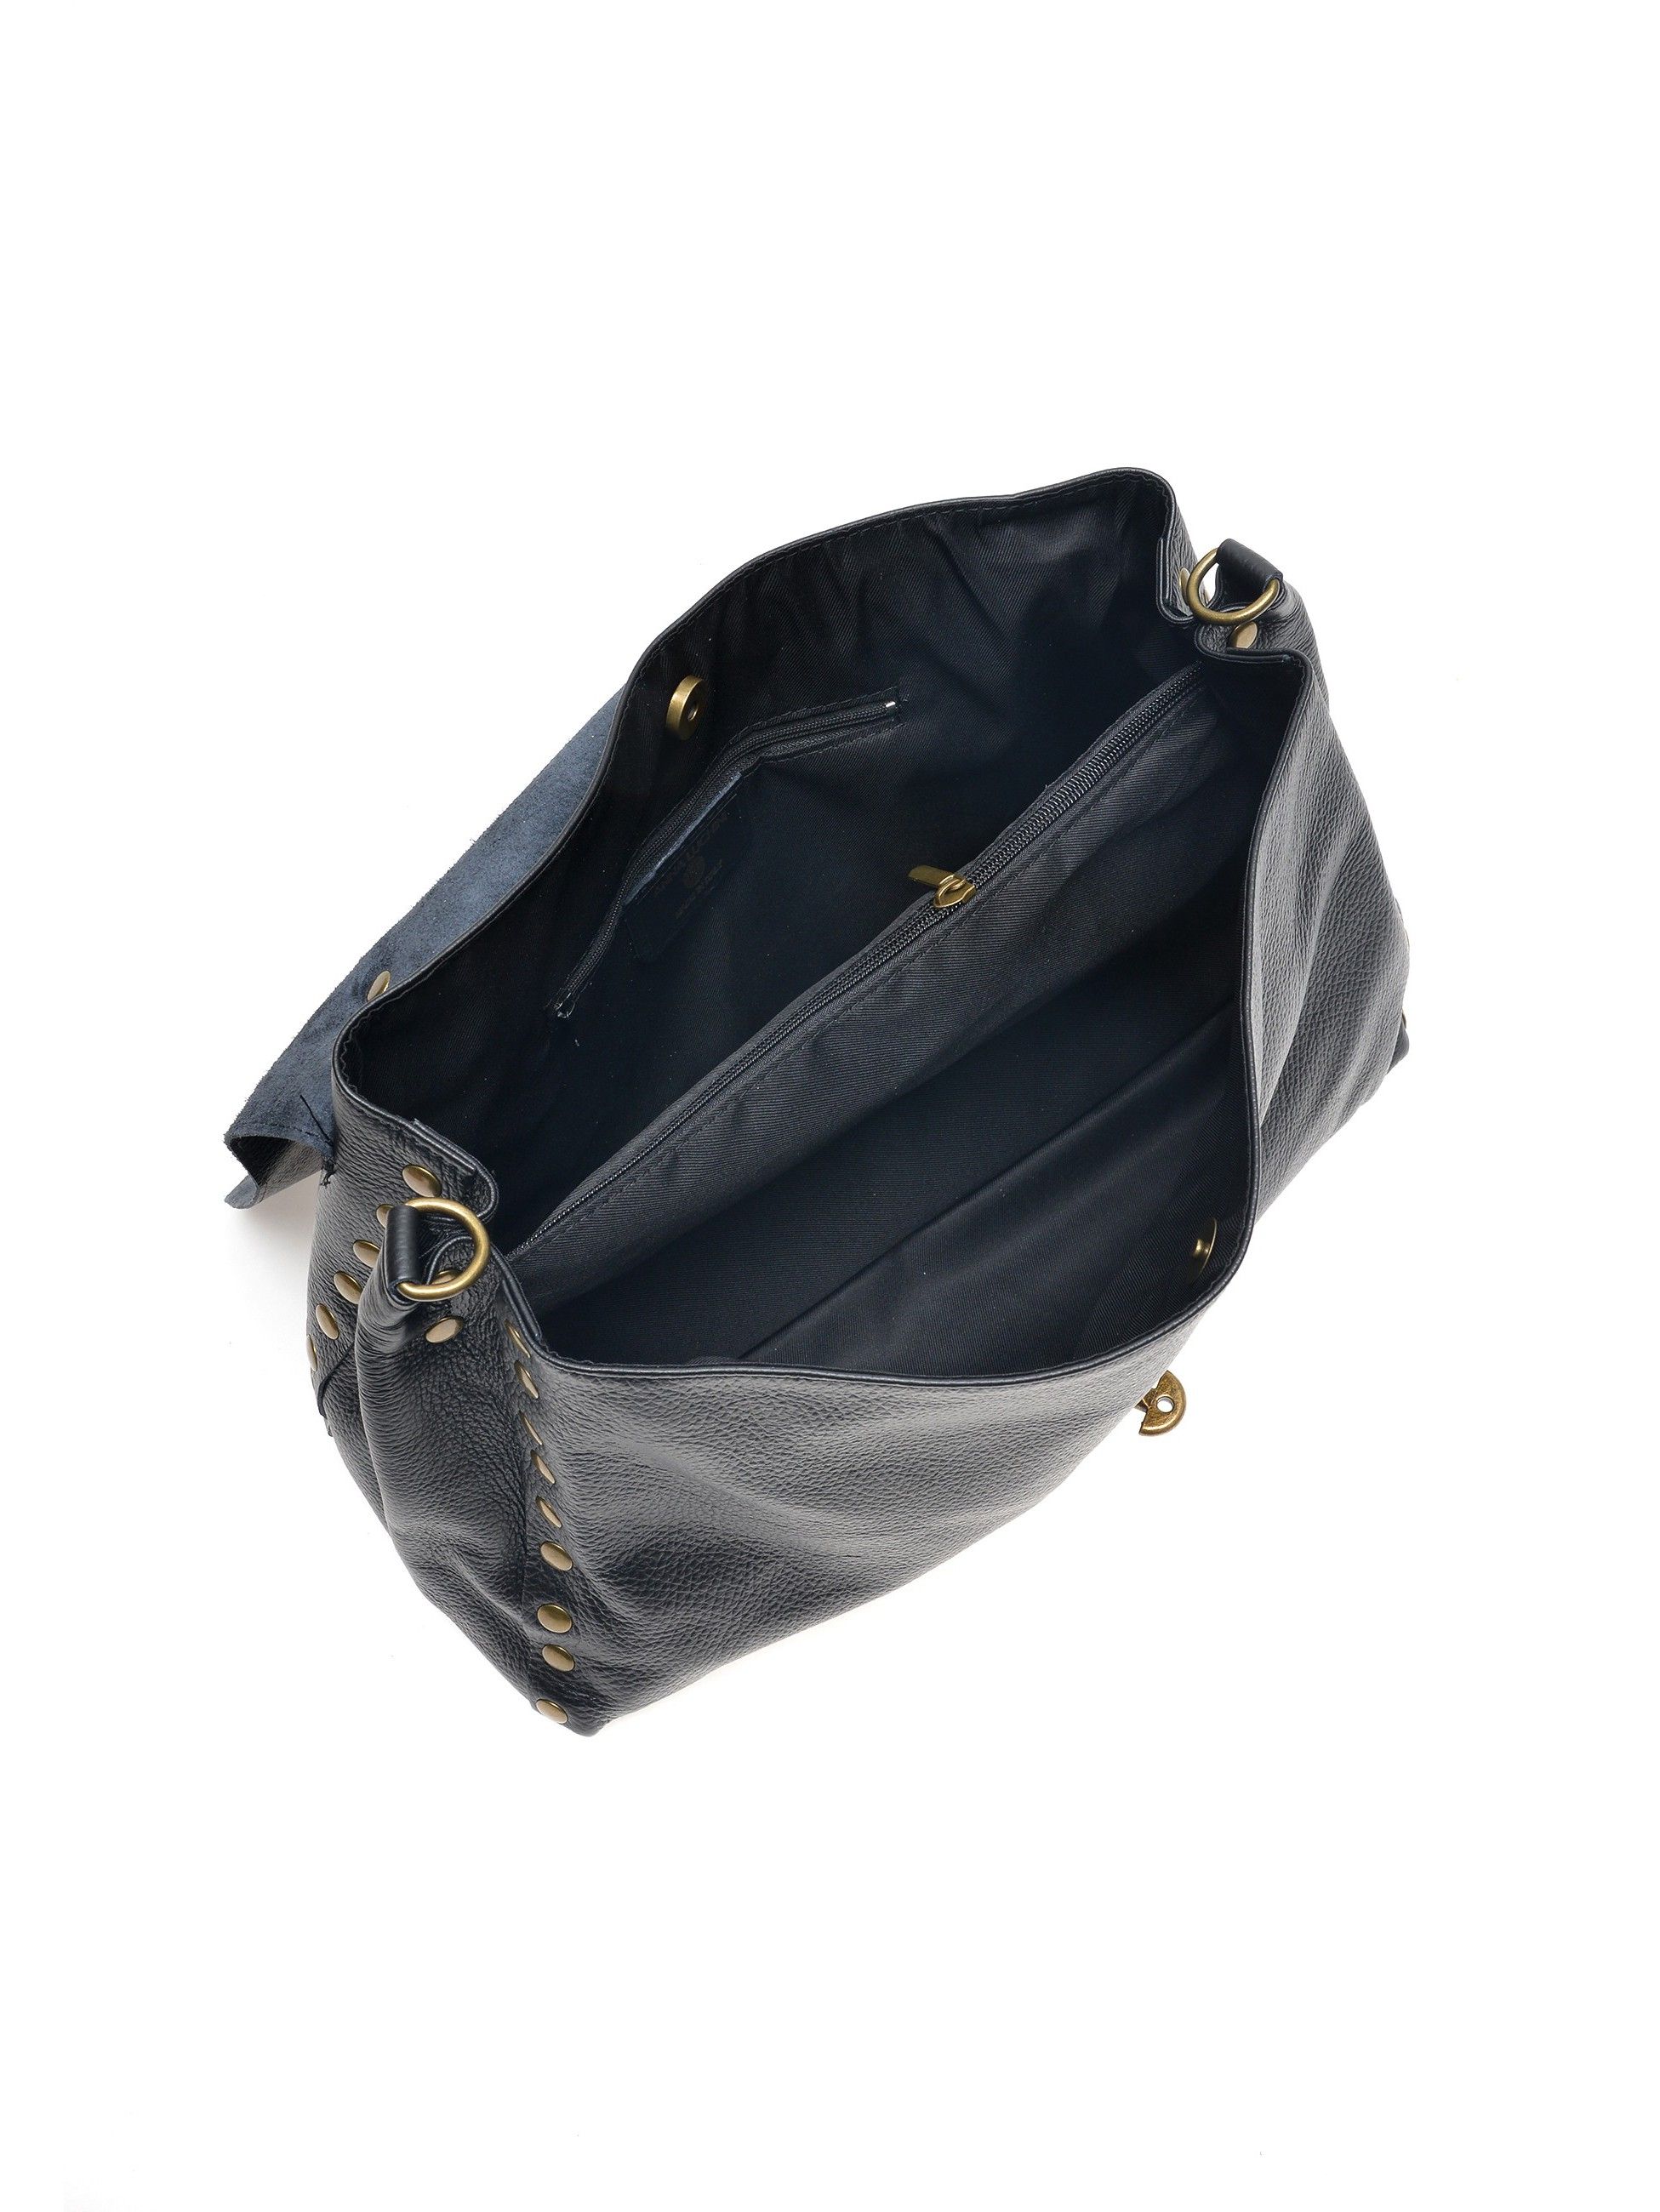 Top Handle Bag
100% cow leather
Magnet and buckle closure
Double compartment bag
Inner zip pockets
Dimensions (L): 26x35x11 cm
Handle: 46 cm
Shoulder strap: 120 cm adjustable